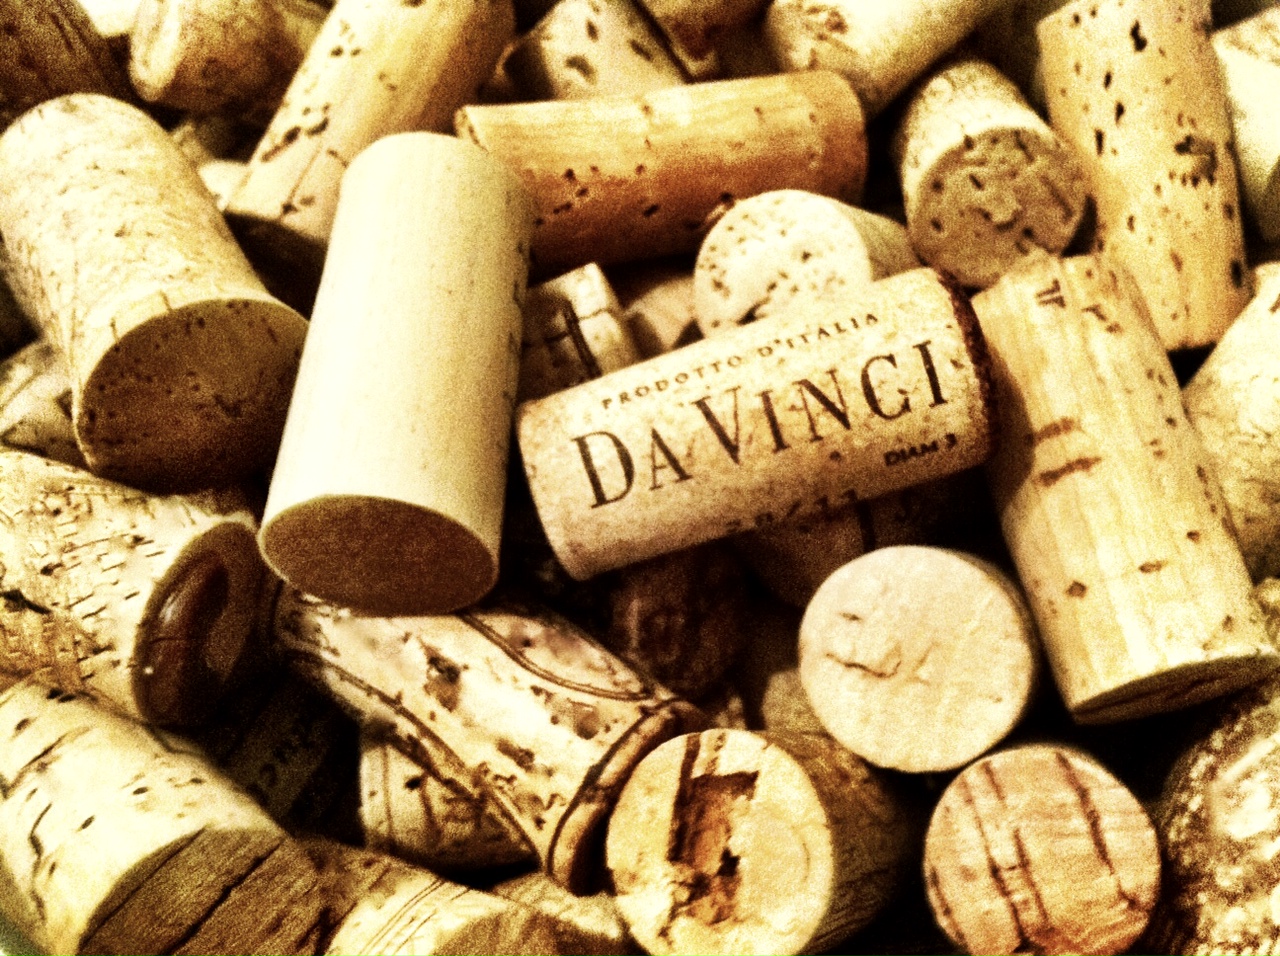 "2012 DaVinci Wine Storyteller Experience"